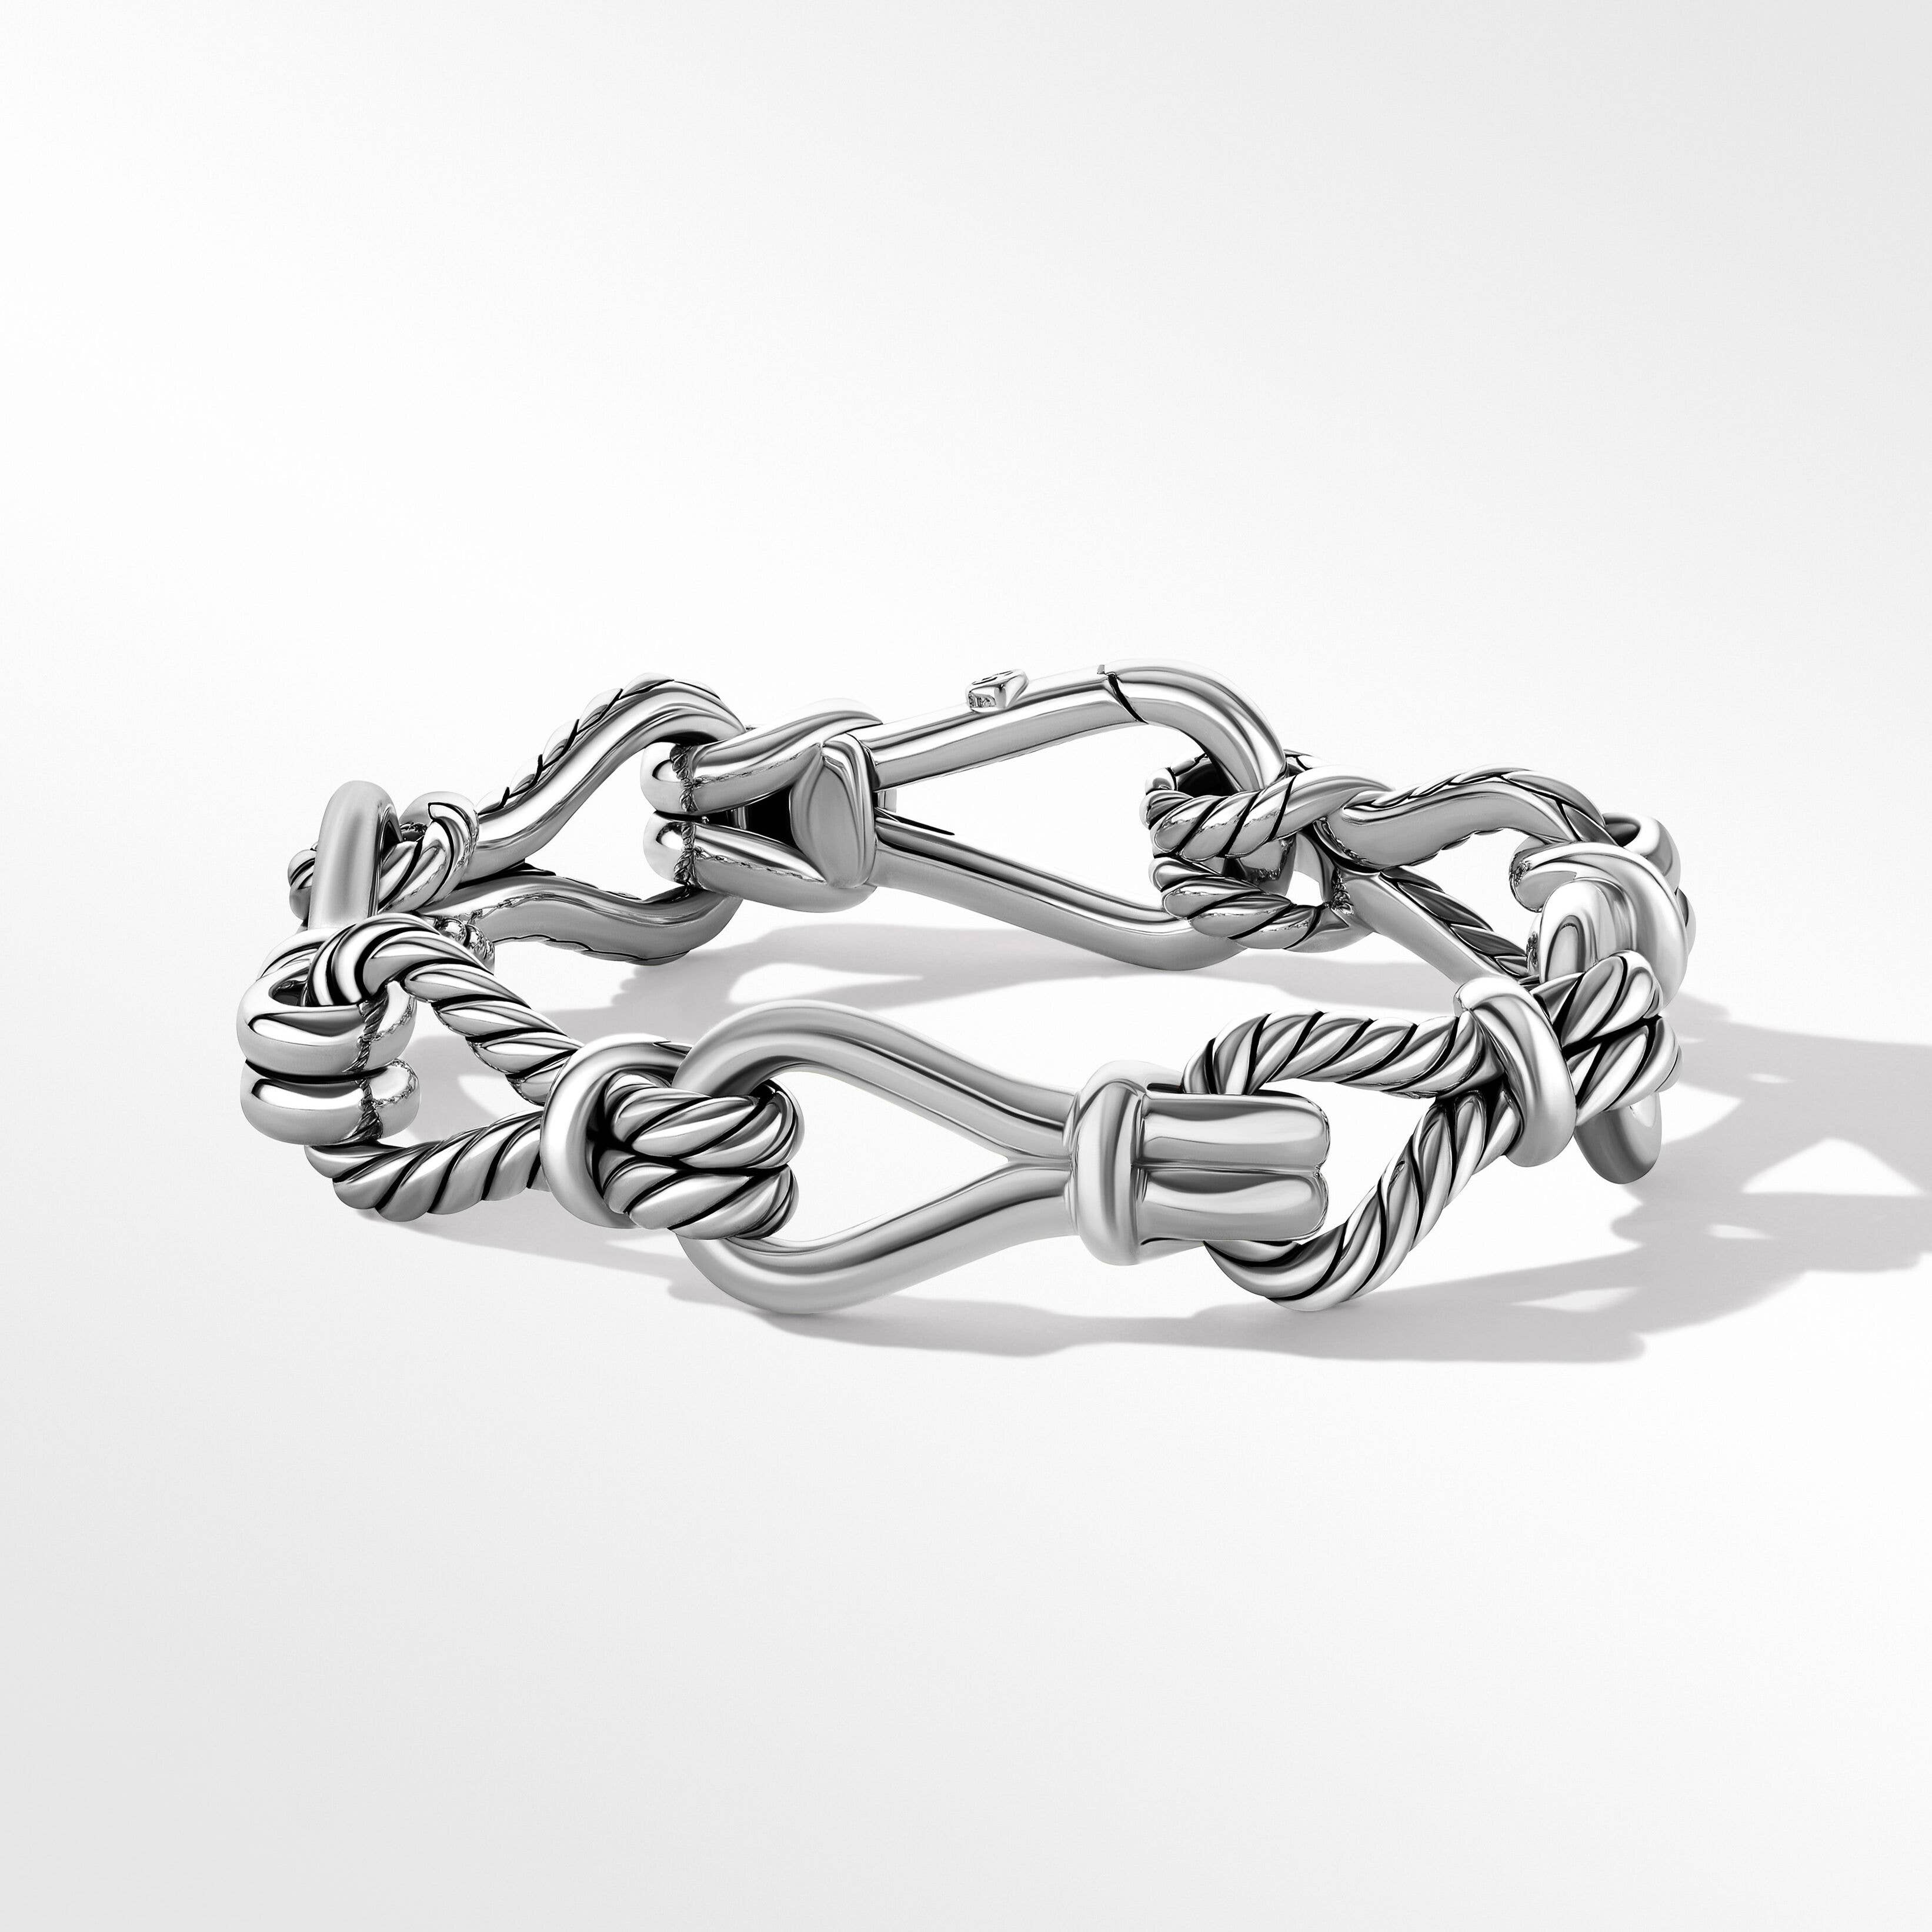 Thoroughbred Loop Chain Bracelet in Sterling Silver